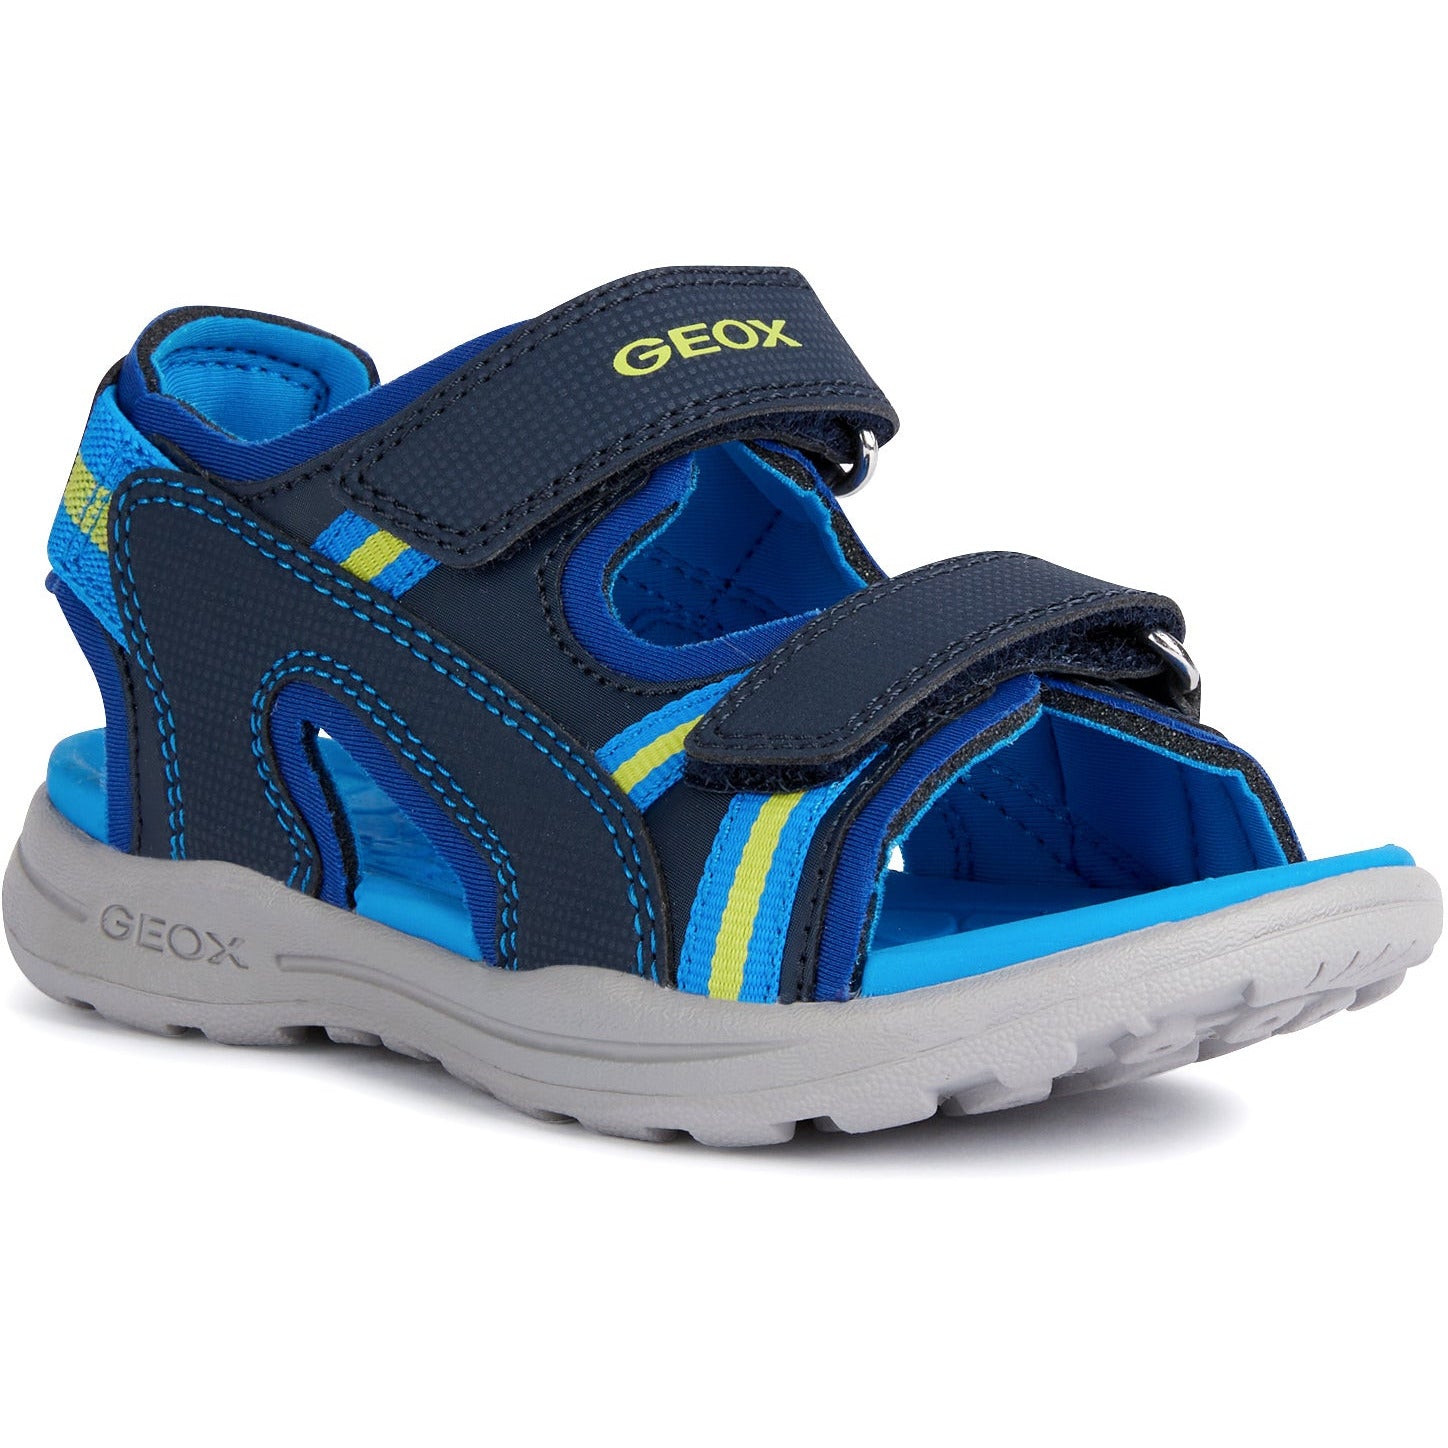 GEOX Vaniett(J255XB) - Boys Water Sandal in Navy/Blue .  Geox Shoes | Childrens Shoe Fitting | Wisemans | Bantry | West Cork | Ireland